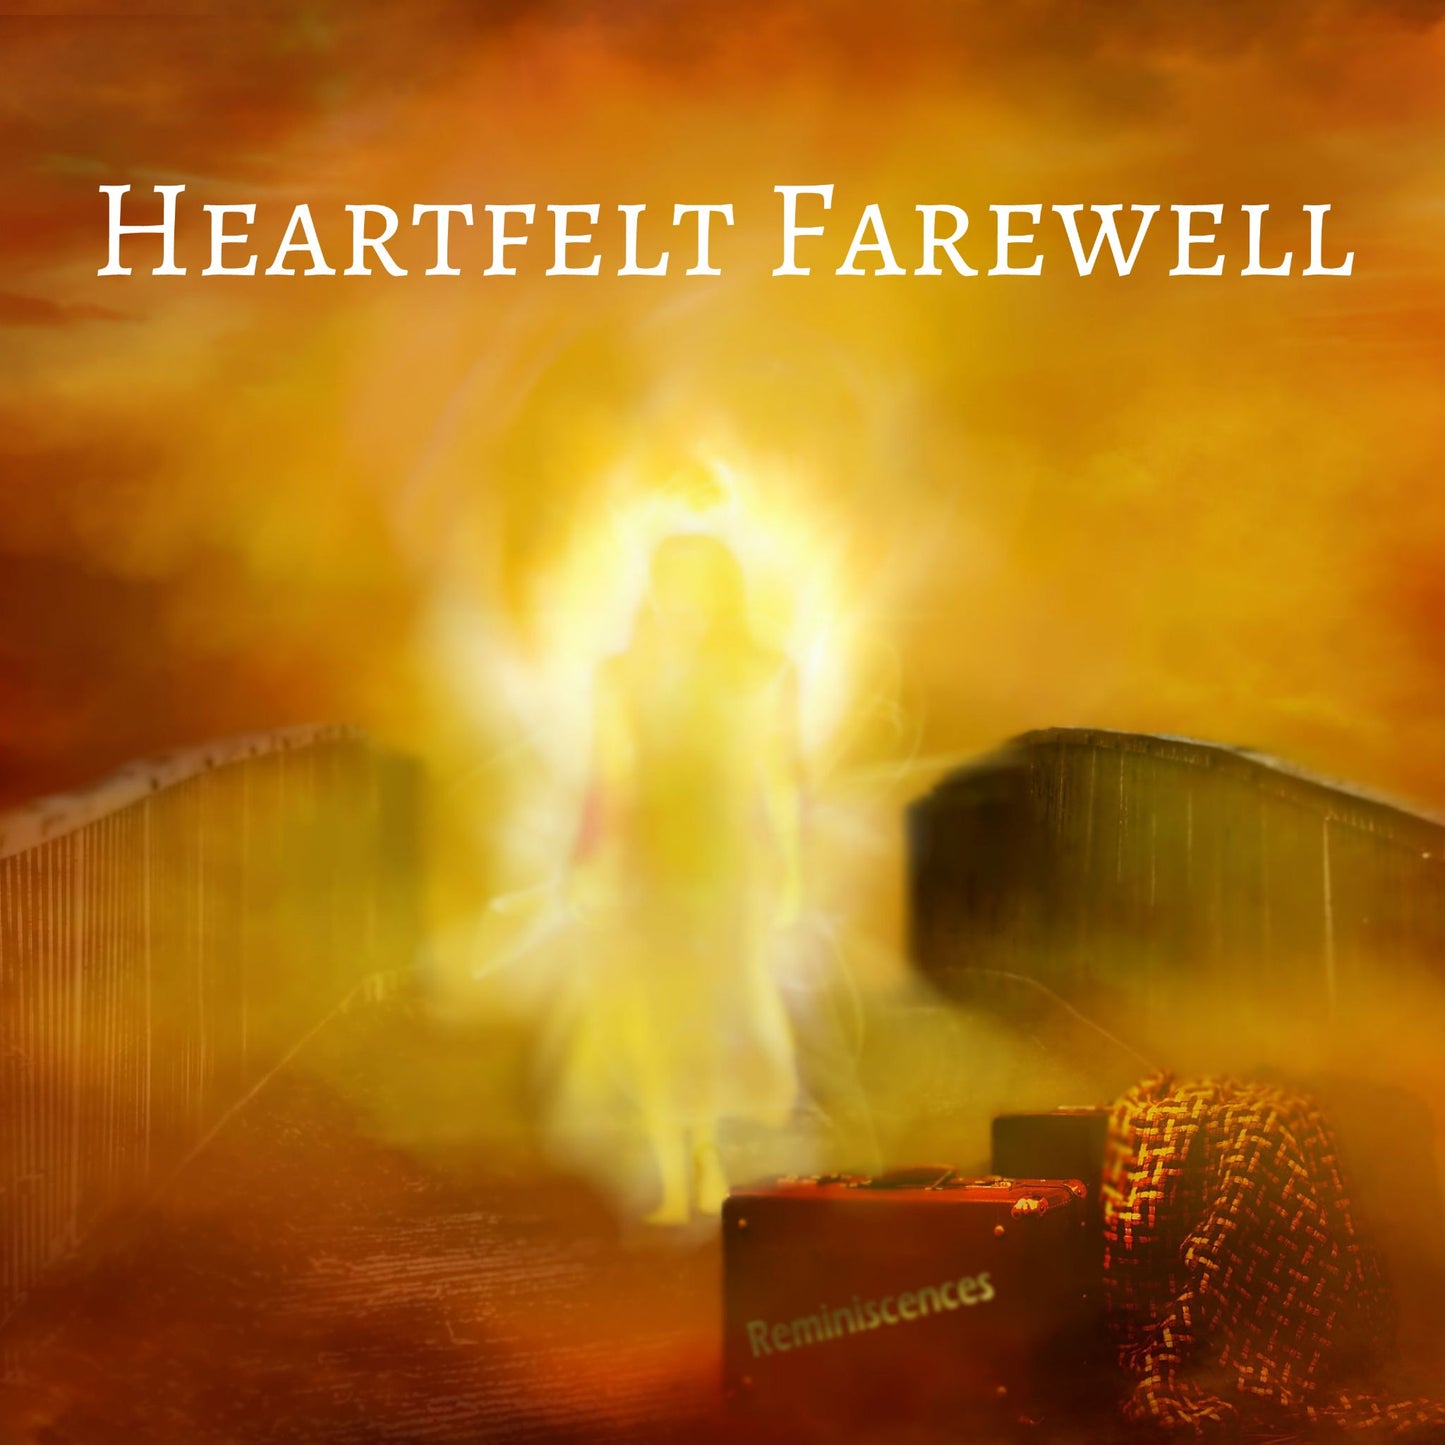 CD Cover of song Heartfelt Farewell